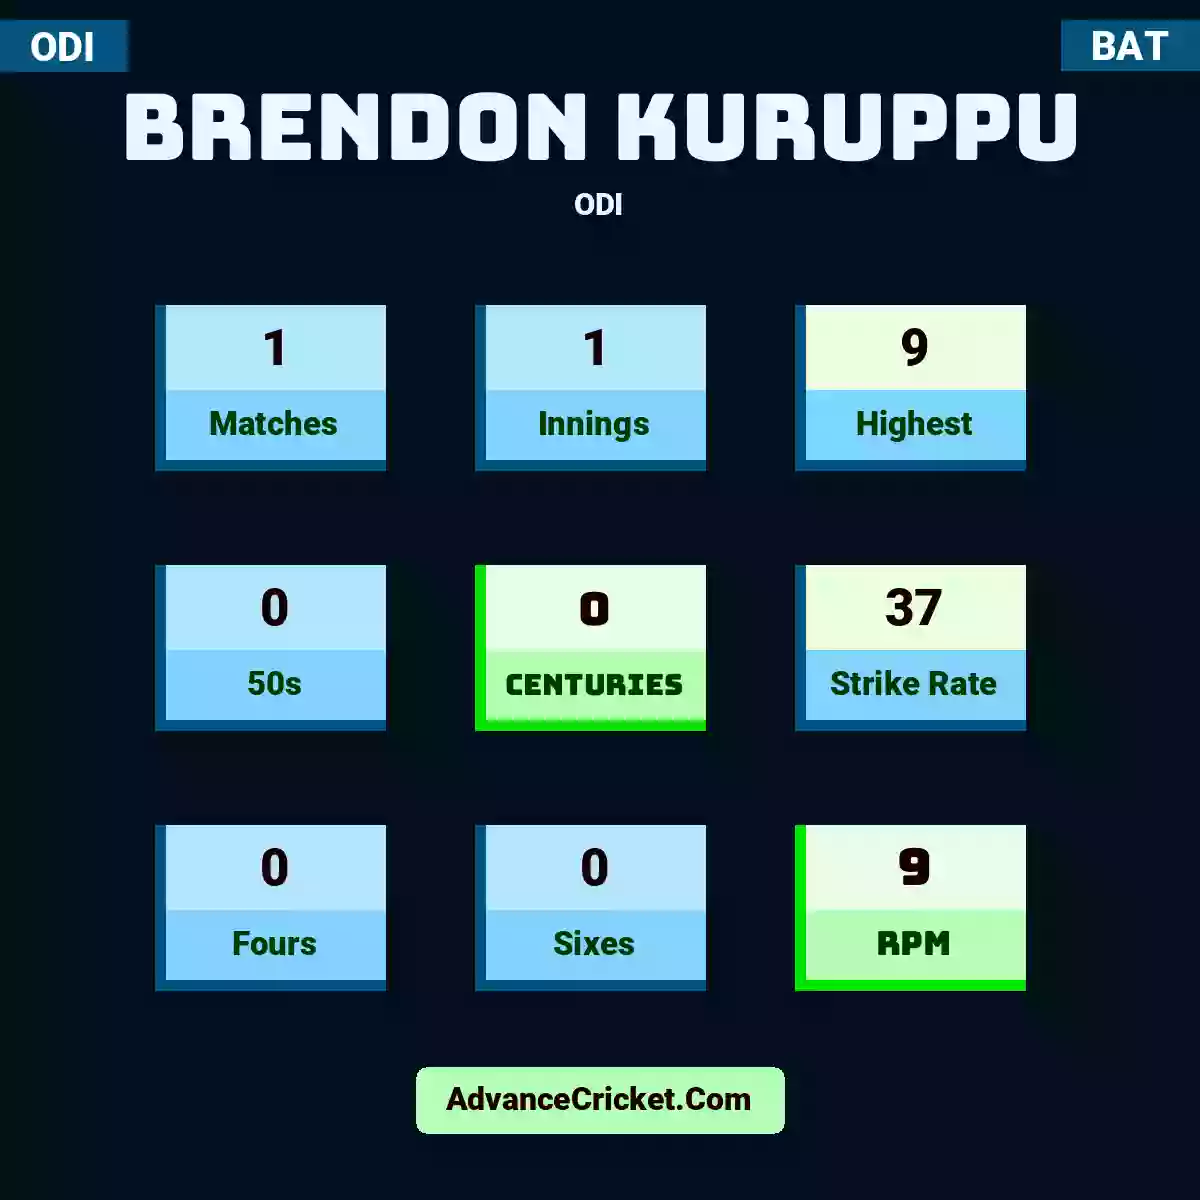 Brendon Kuruppu ODI , Brendon Kuruppu played 1 matches, scored 9 runs as highest, 0 half-centuries, and 0 centuries, with a strike rate of 37. B.Kuruppu hit 0 fours and 0 sixes, with an RPM of 9.